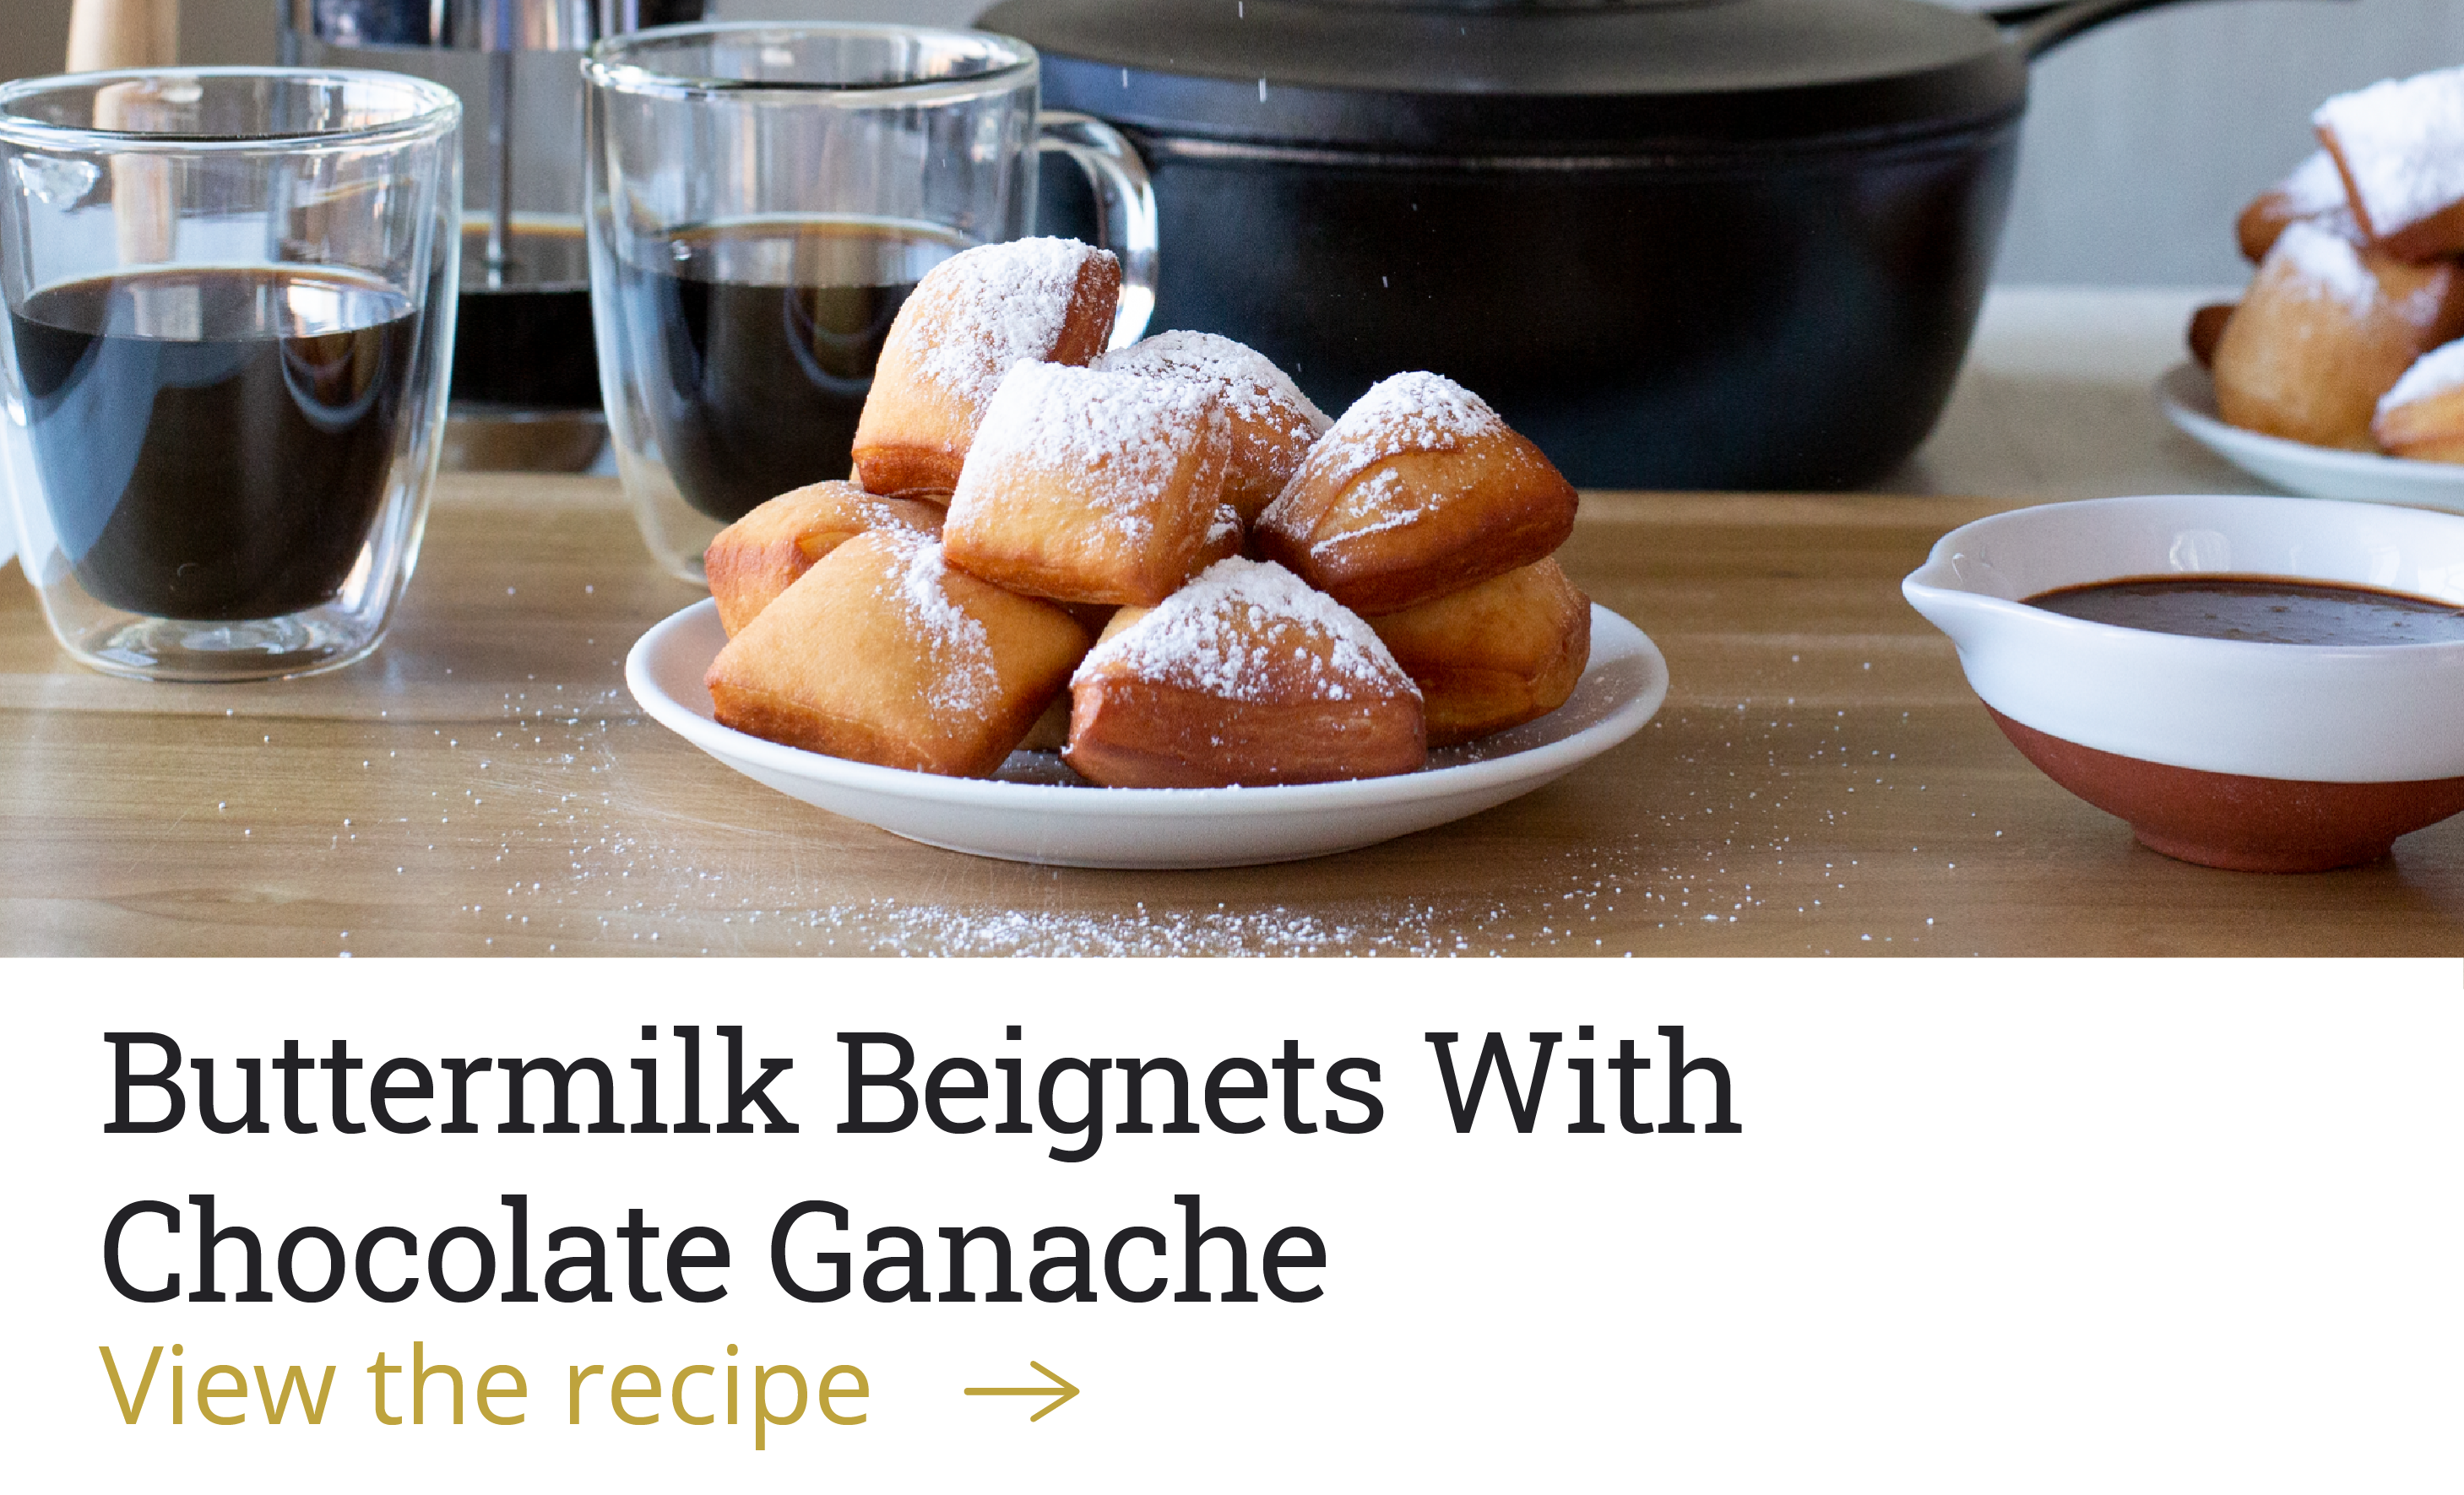 Buttermilk Beignets With Chocolate Ganache [View the recipe-->]